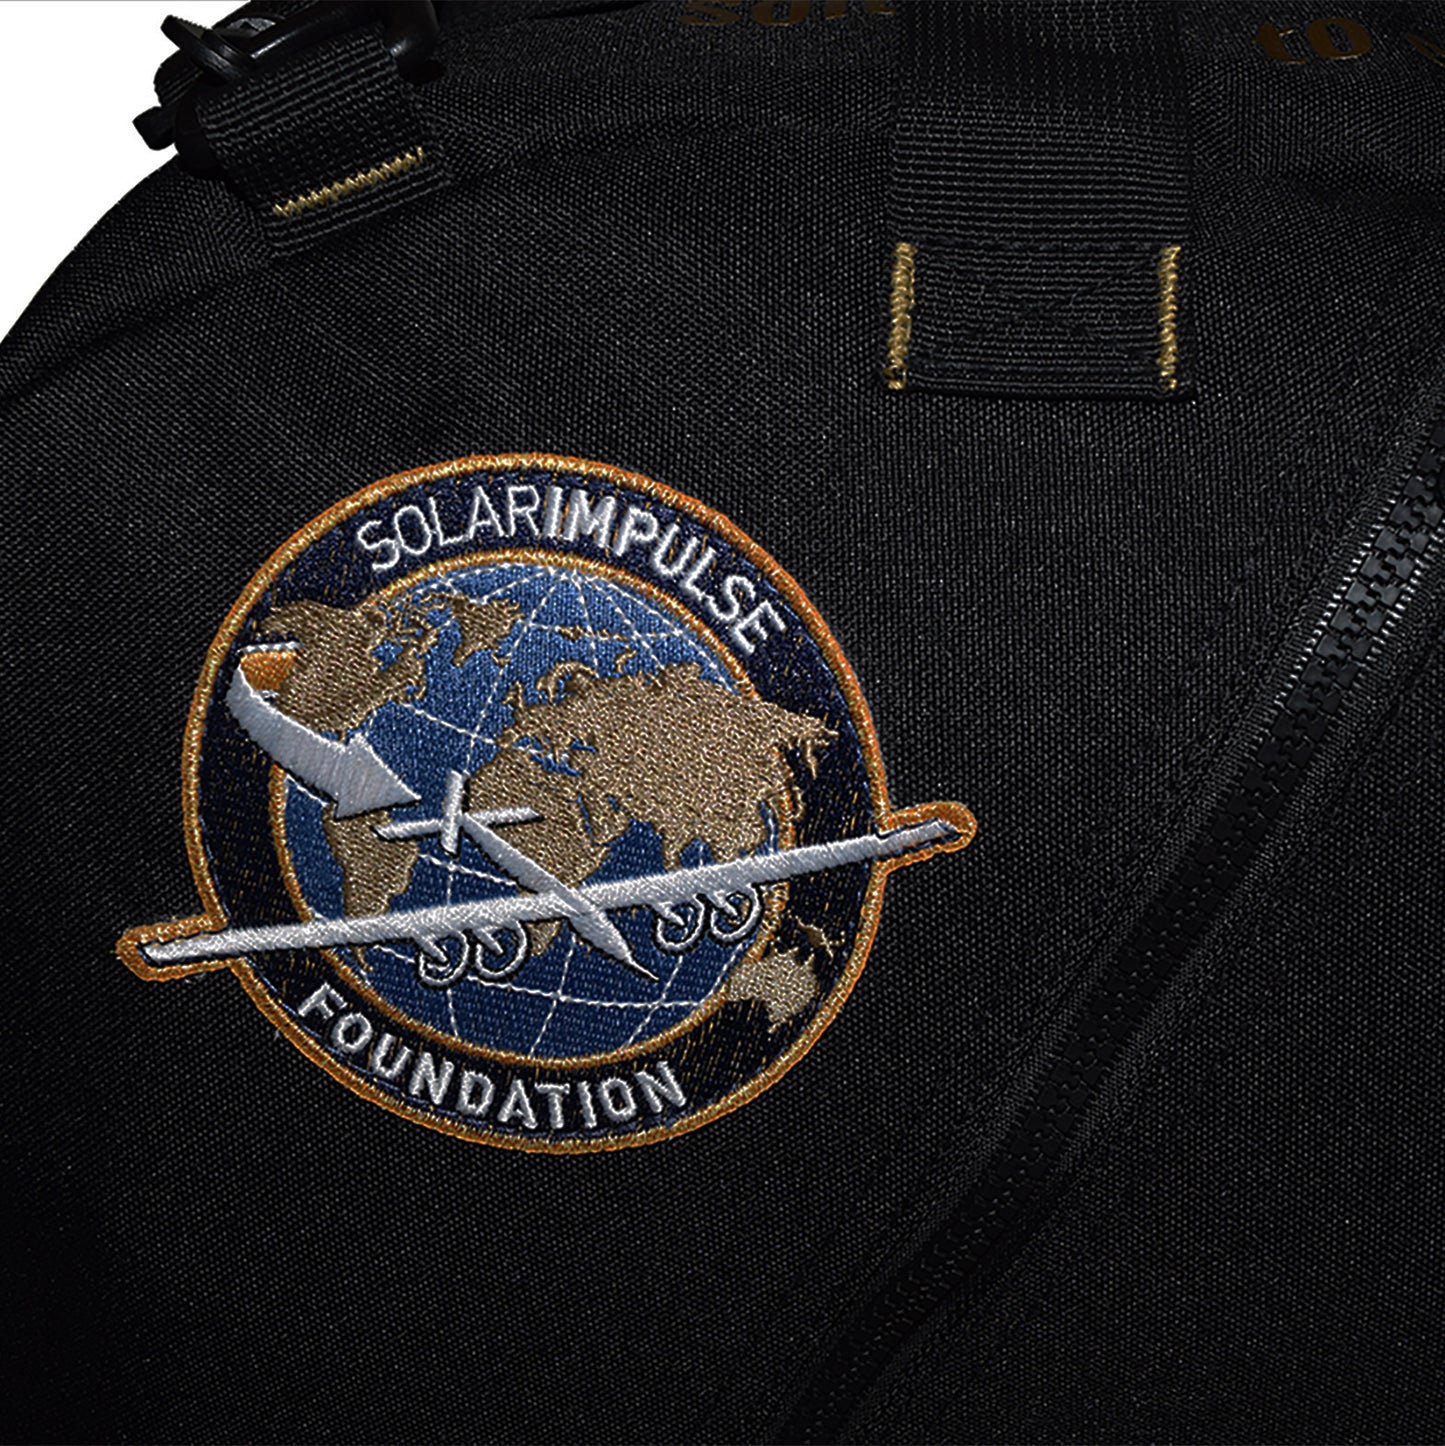 Sport Bag & Backpack - Solar Impulse Foundation